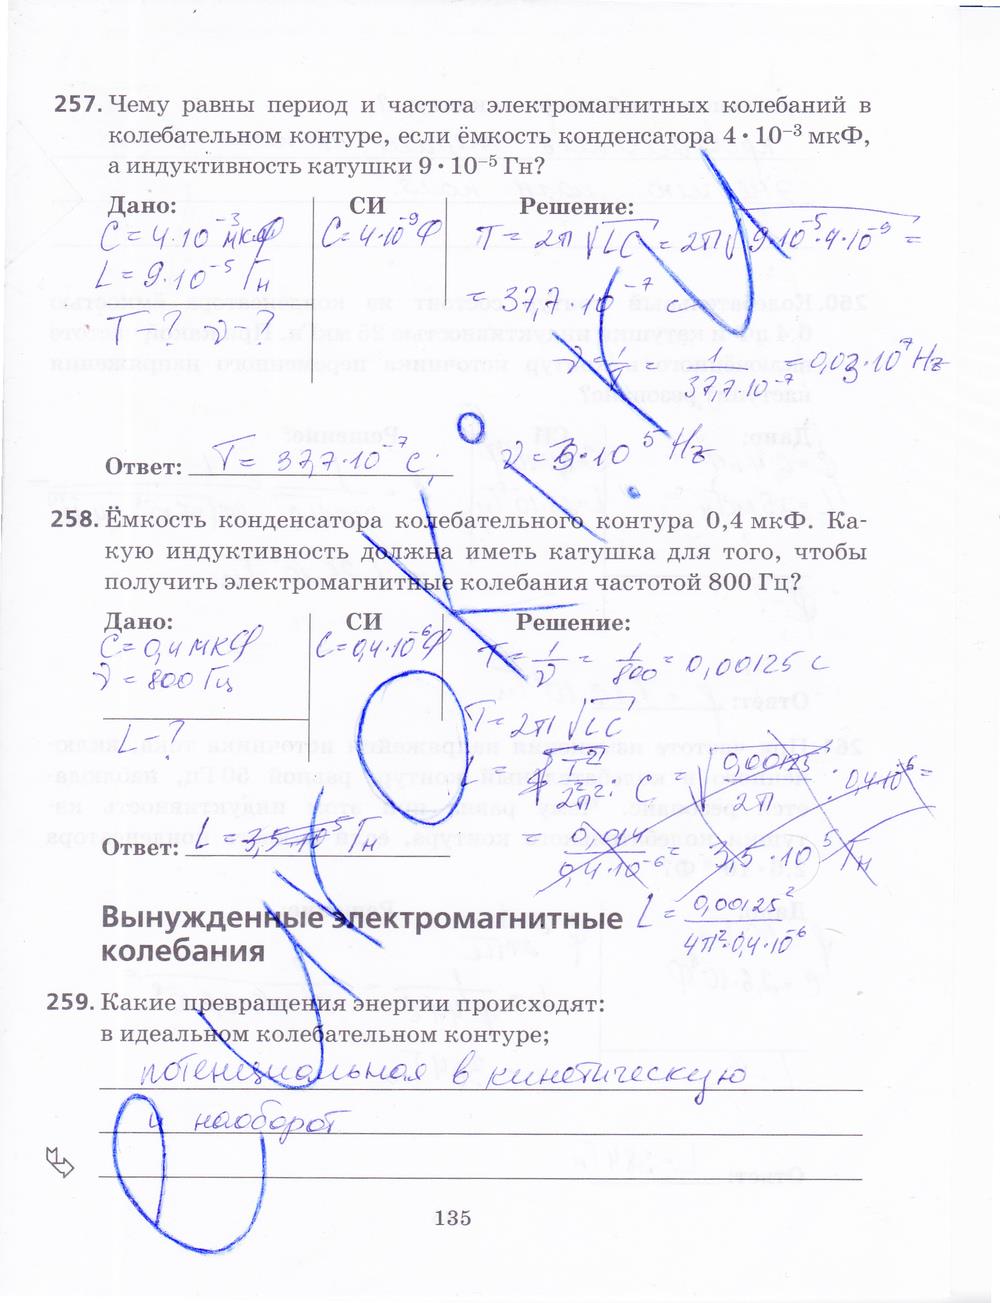 гдз 9 класс рабочая тетрадь страница 135 физика Пурышева, Важеевская, Чаругин